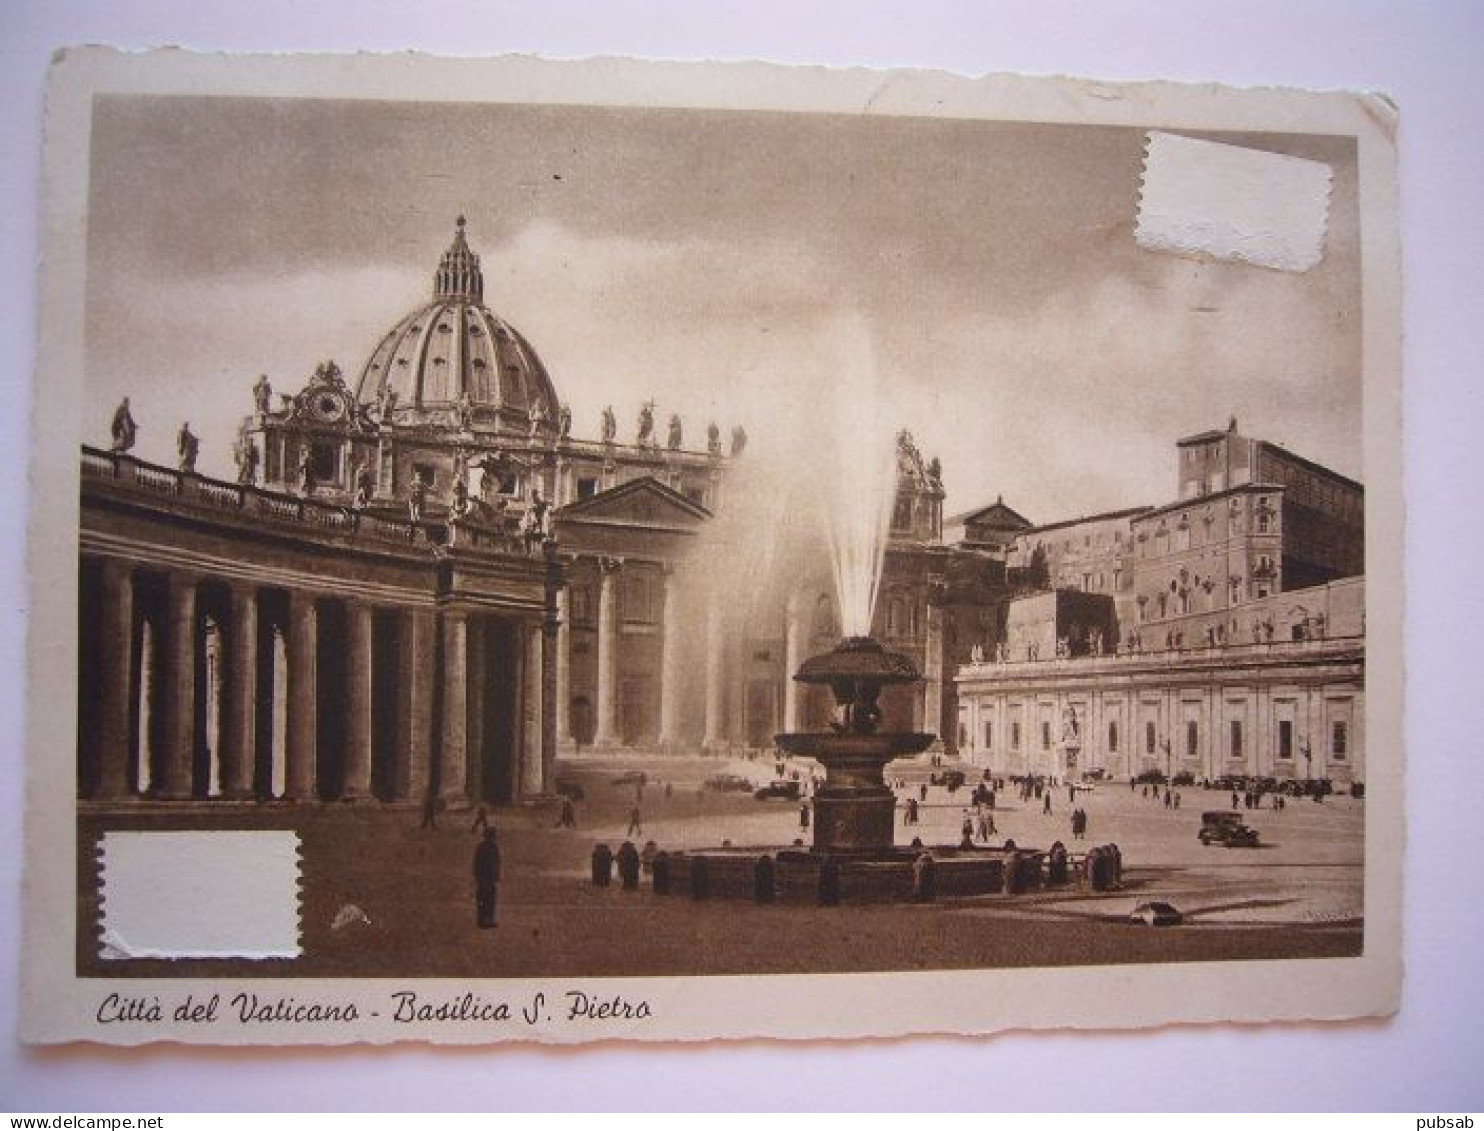 Avion / Airplane / CITTA DEL VATICANO / Flight From Vatican City To Berlin / Jul 4, 1938 - 1919-1938: Entre Guerres